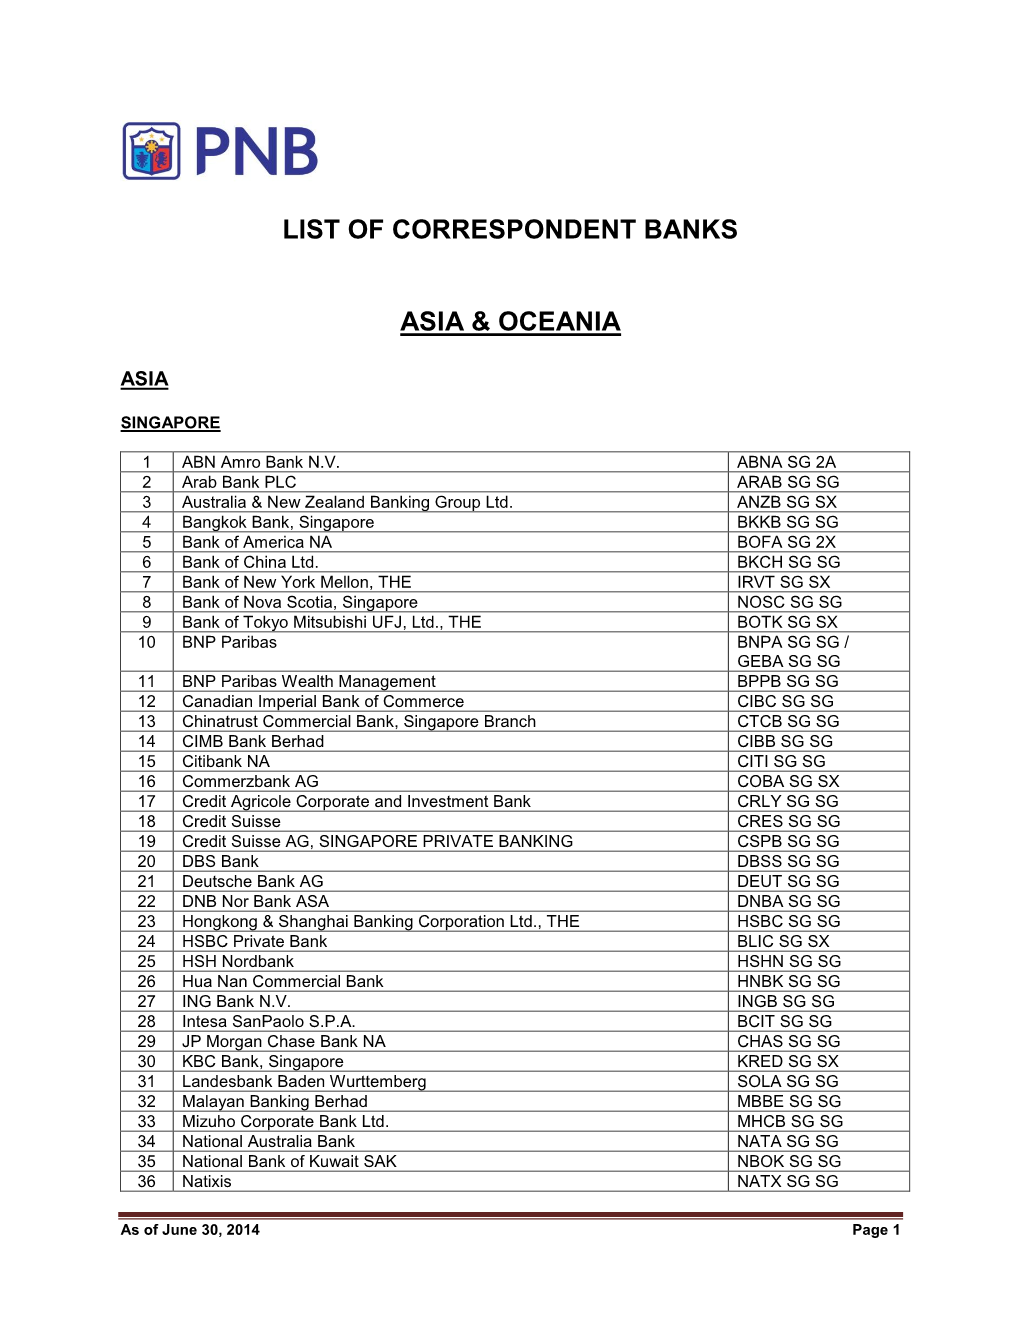 List of Correspondent Banks Asia & Oceania